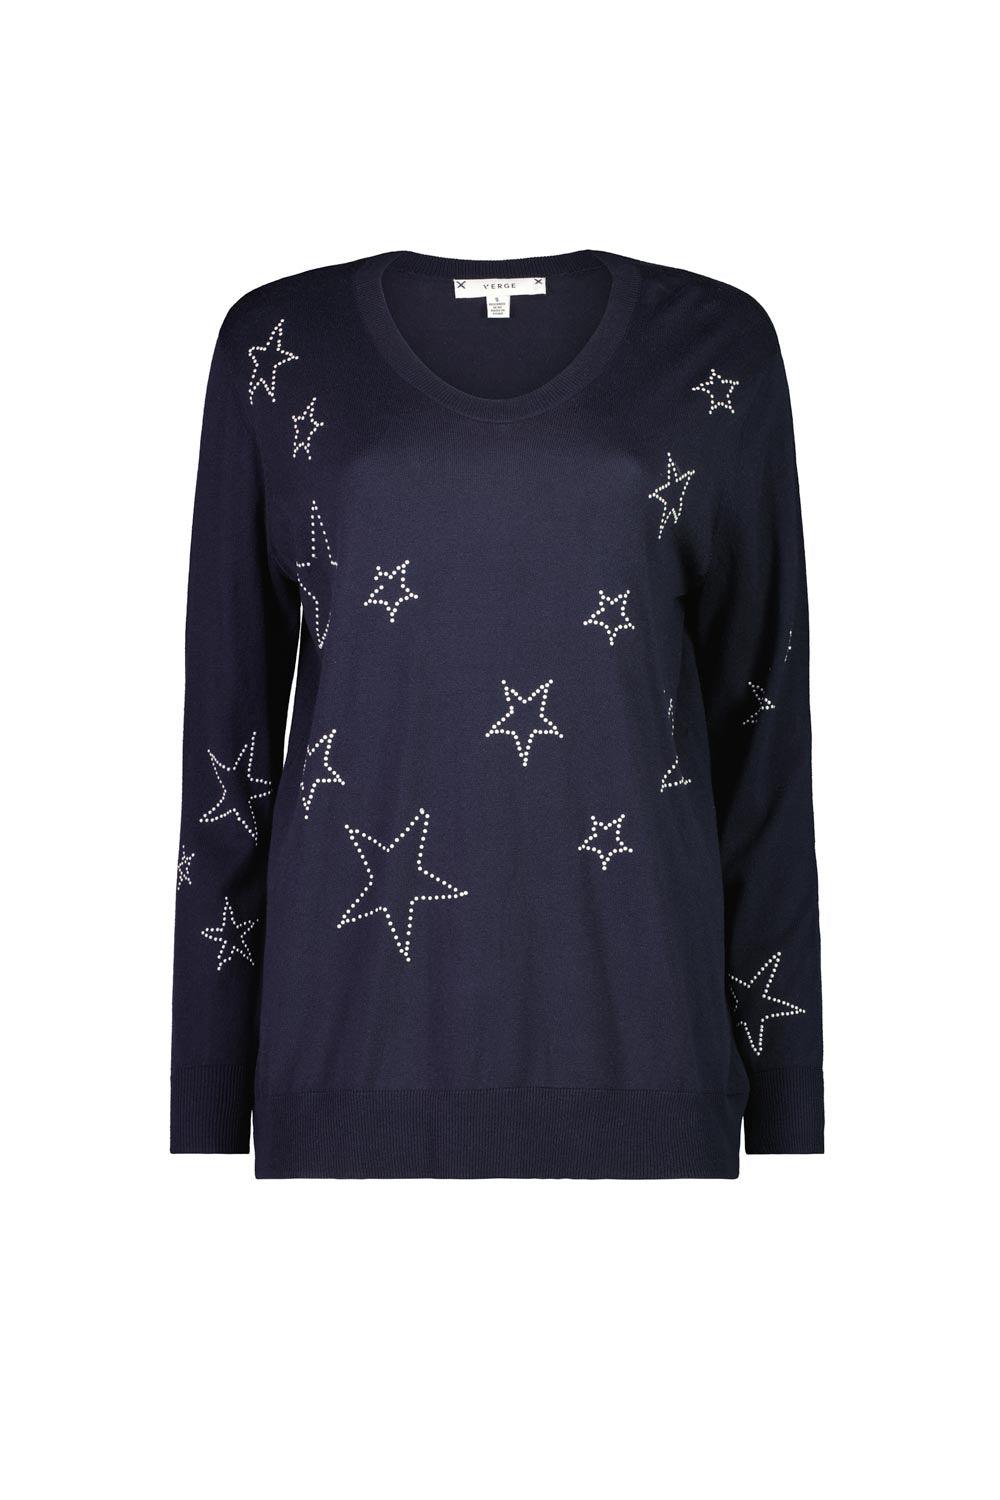 Comet Sweater - Neat Navy - Sweater VERGE